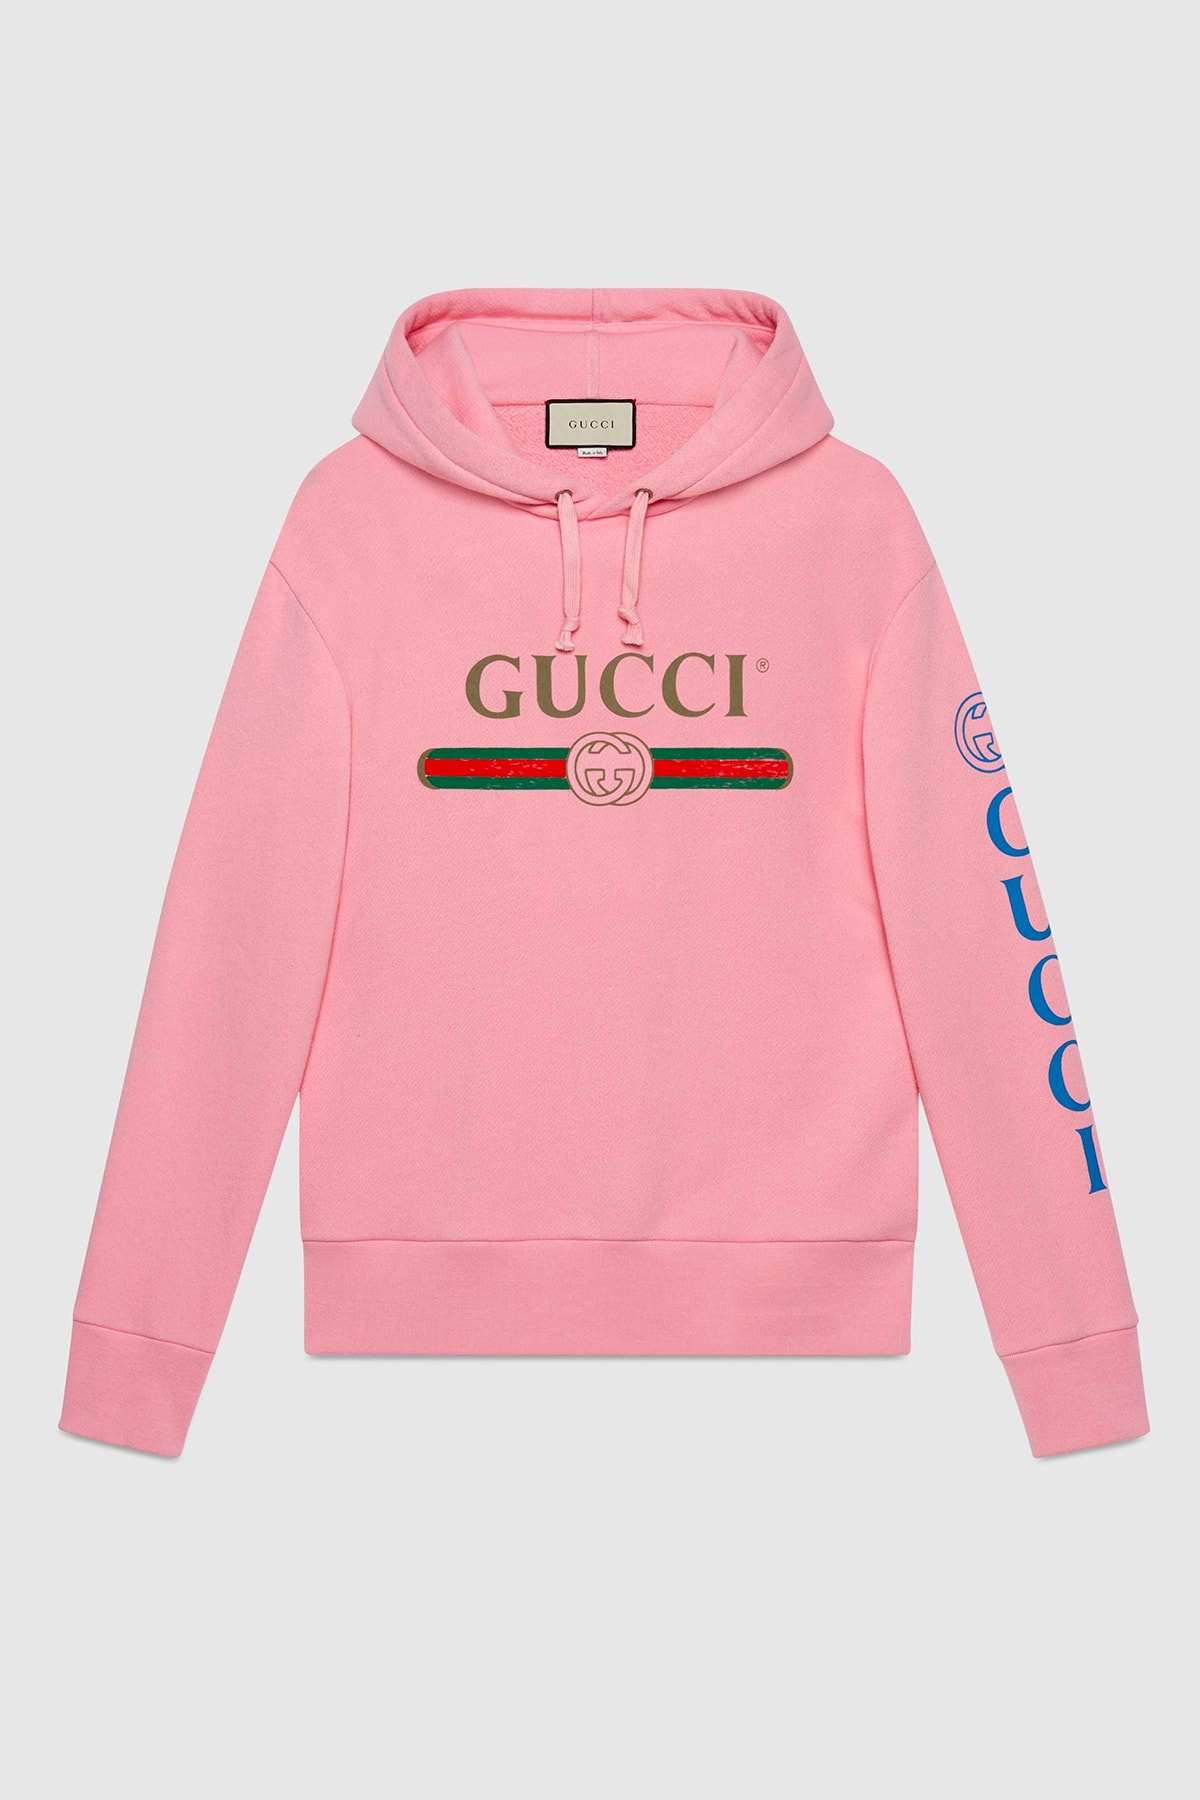 Gucci Vintage Bootleg Logo Hoodie Menswear Pink Dragon Embroidery Sleeve